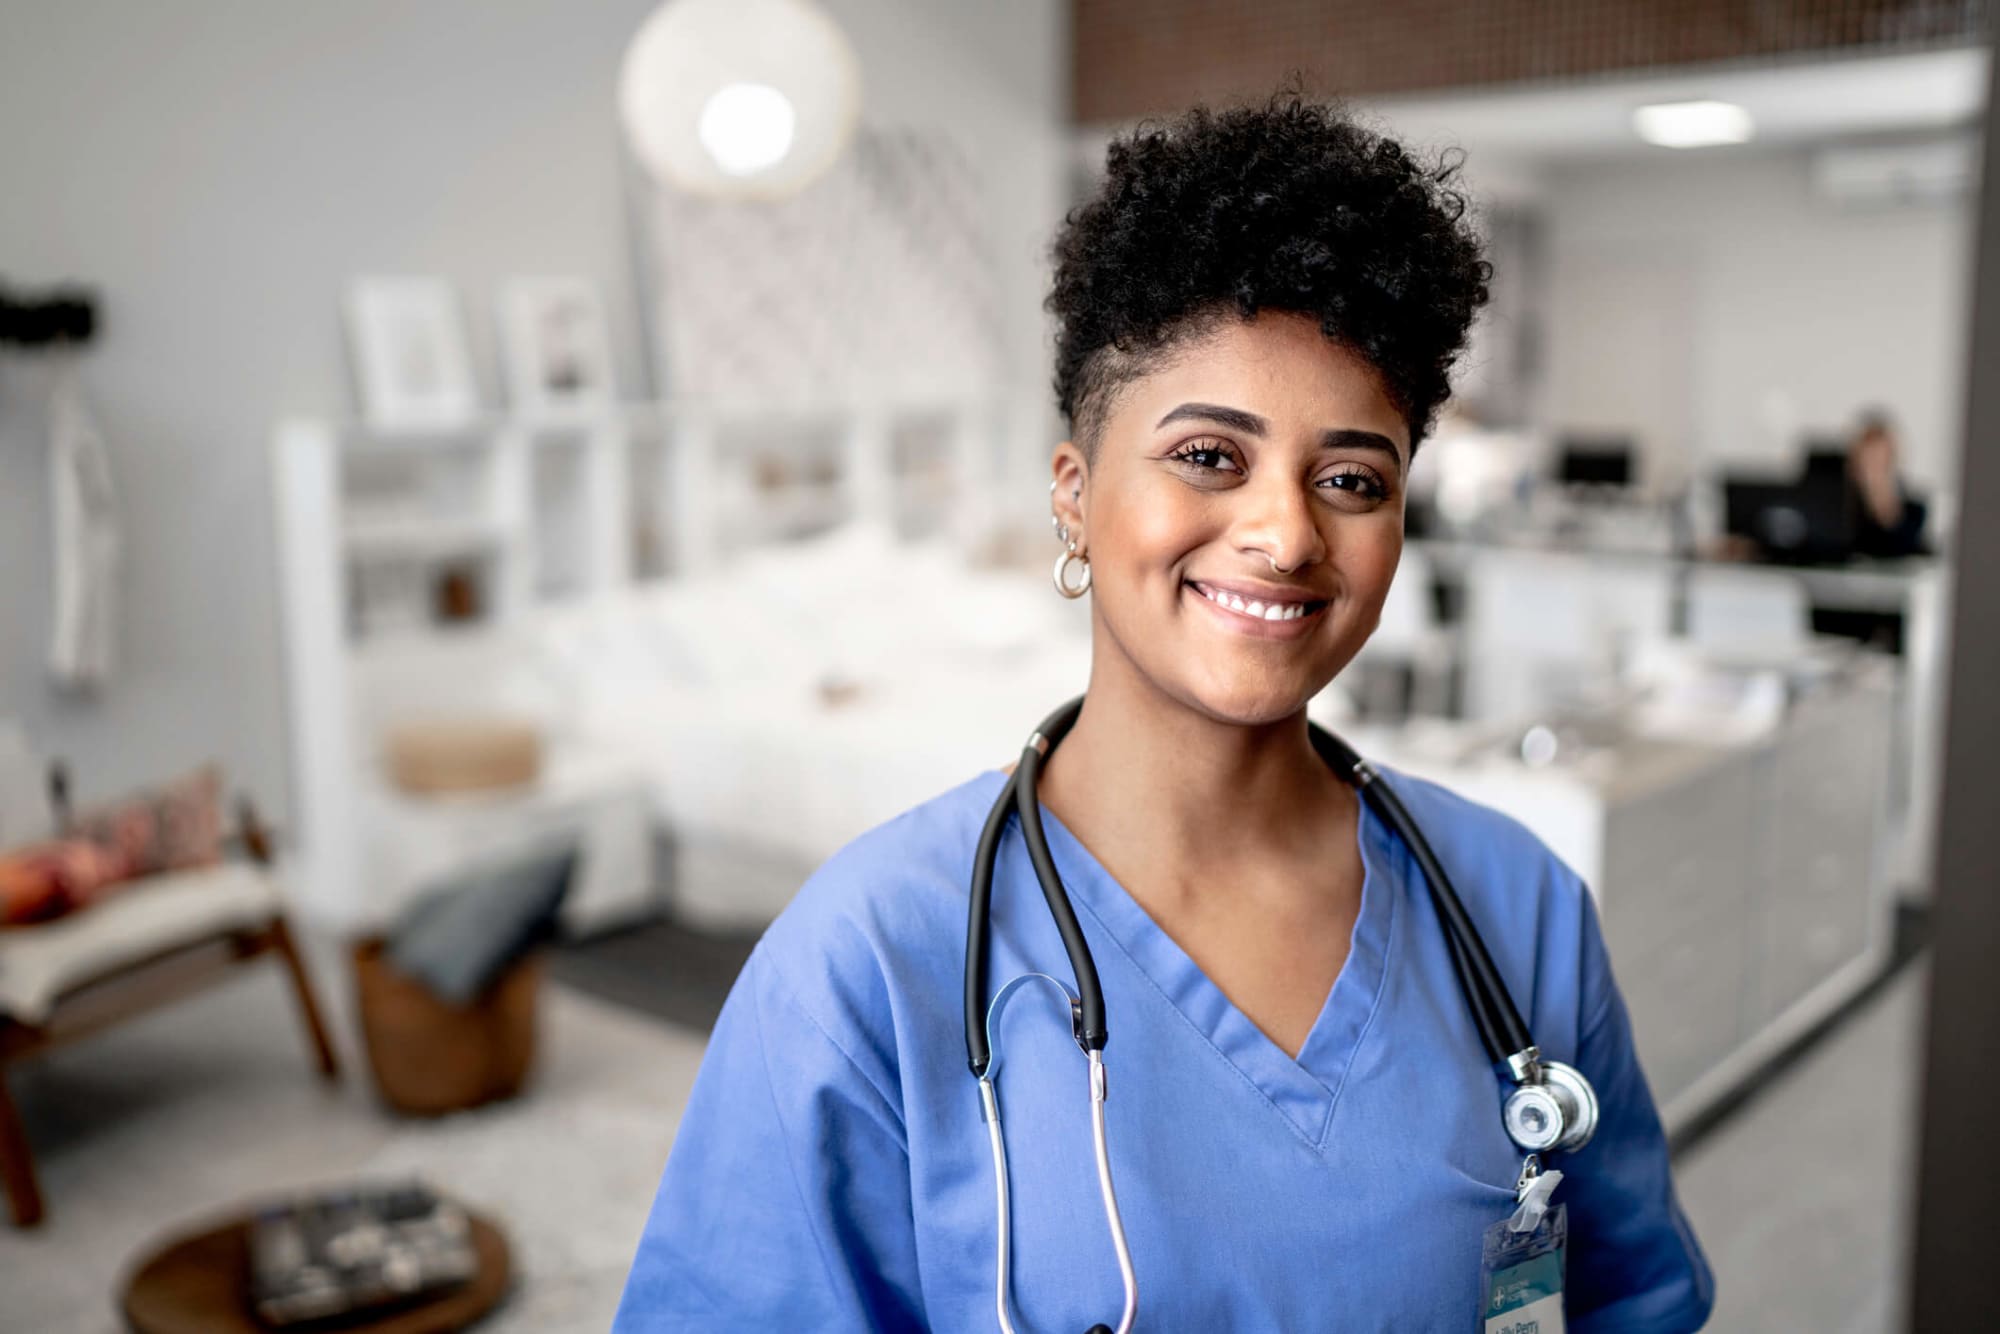 The 20 Best Nursing Career Specialties Based On Salary